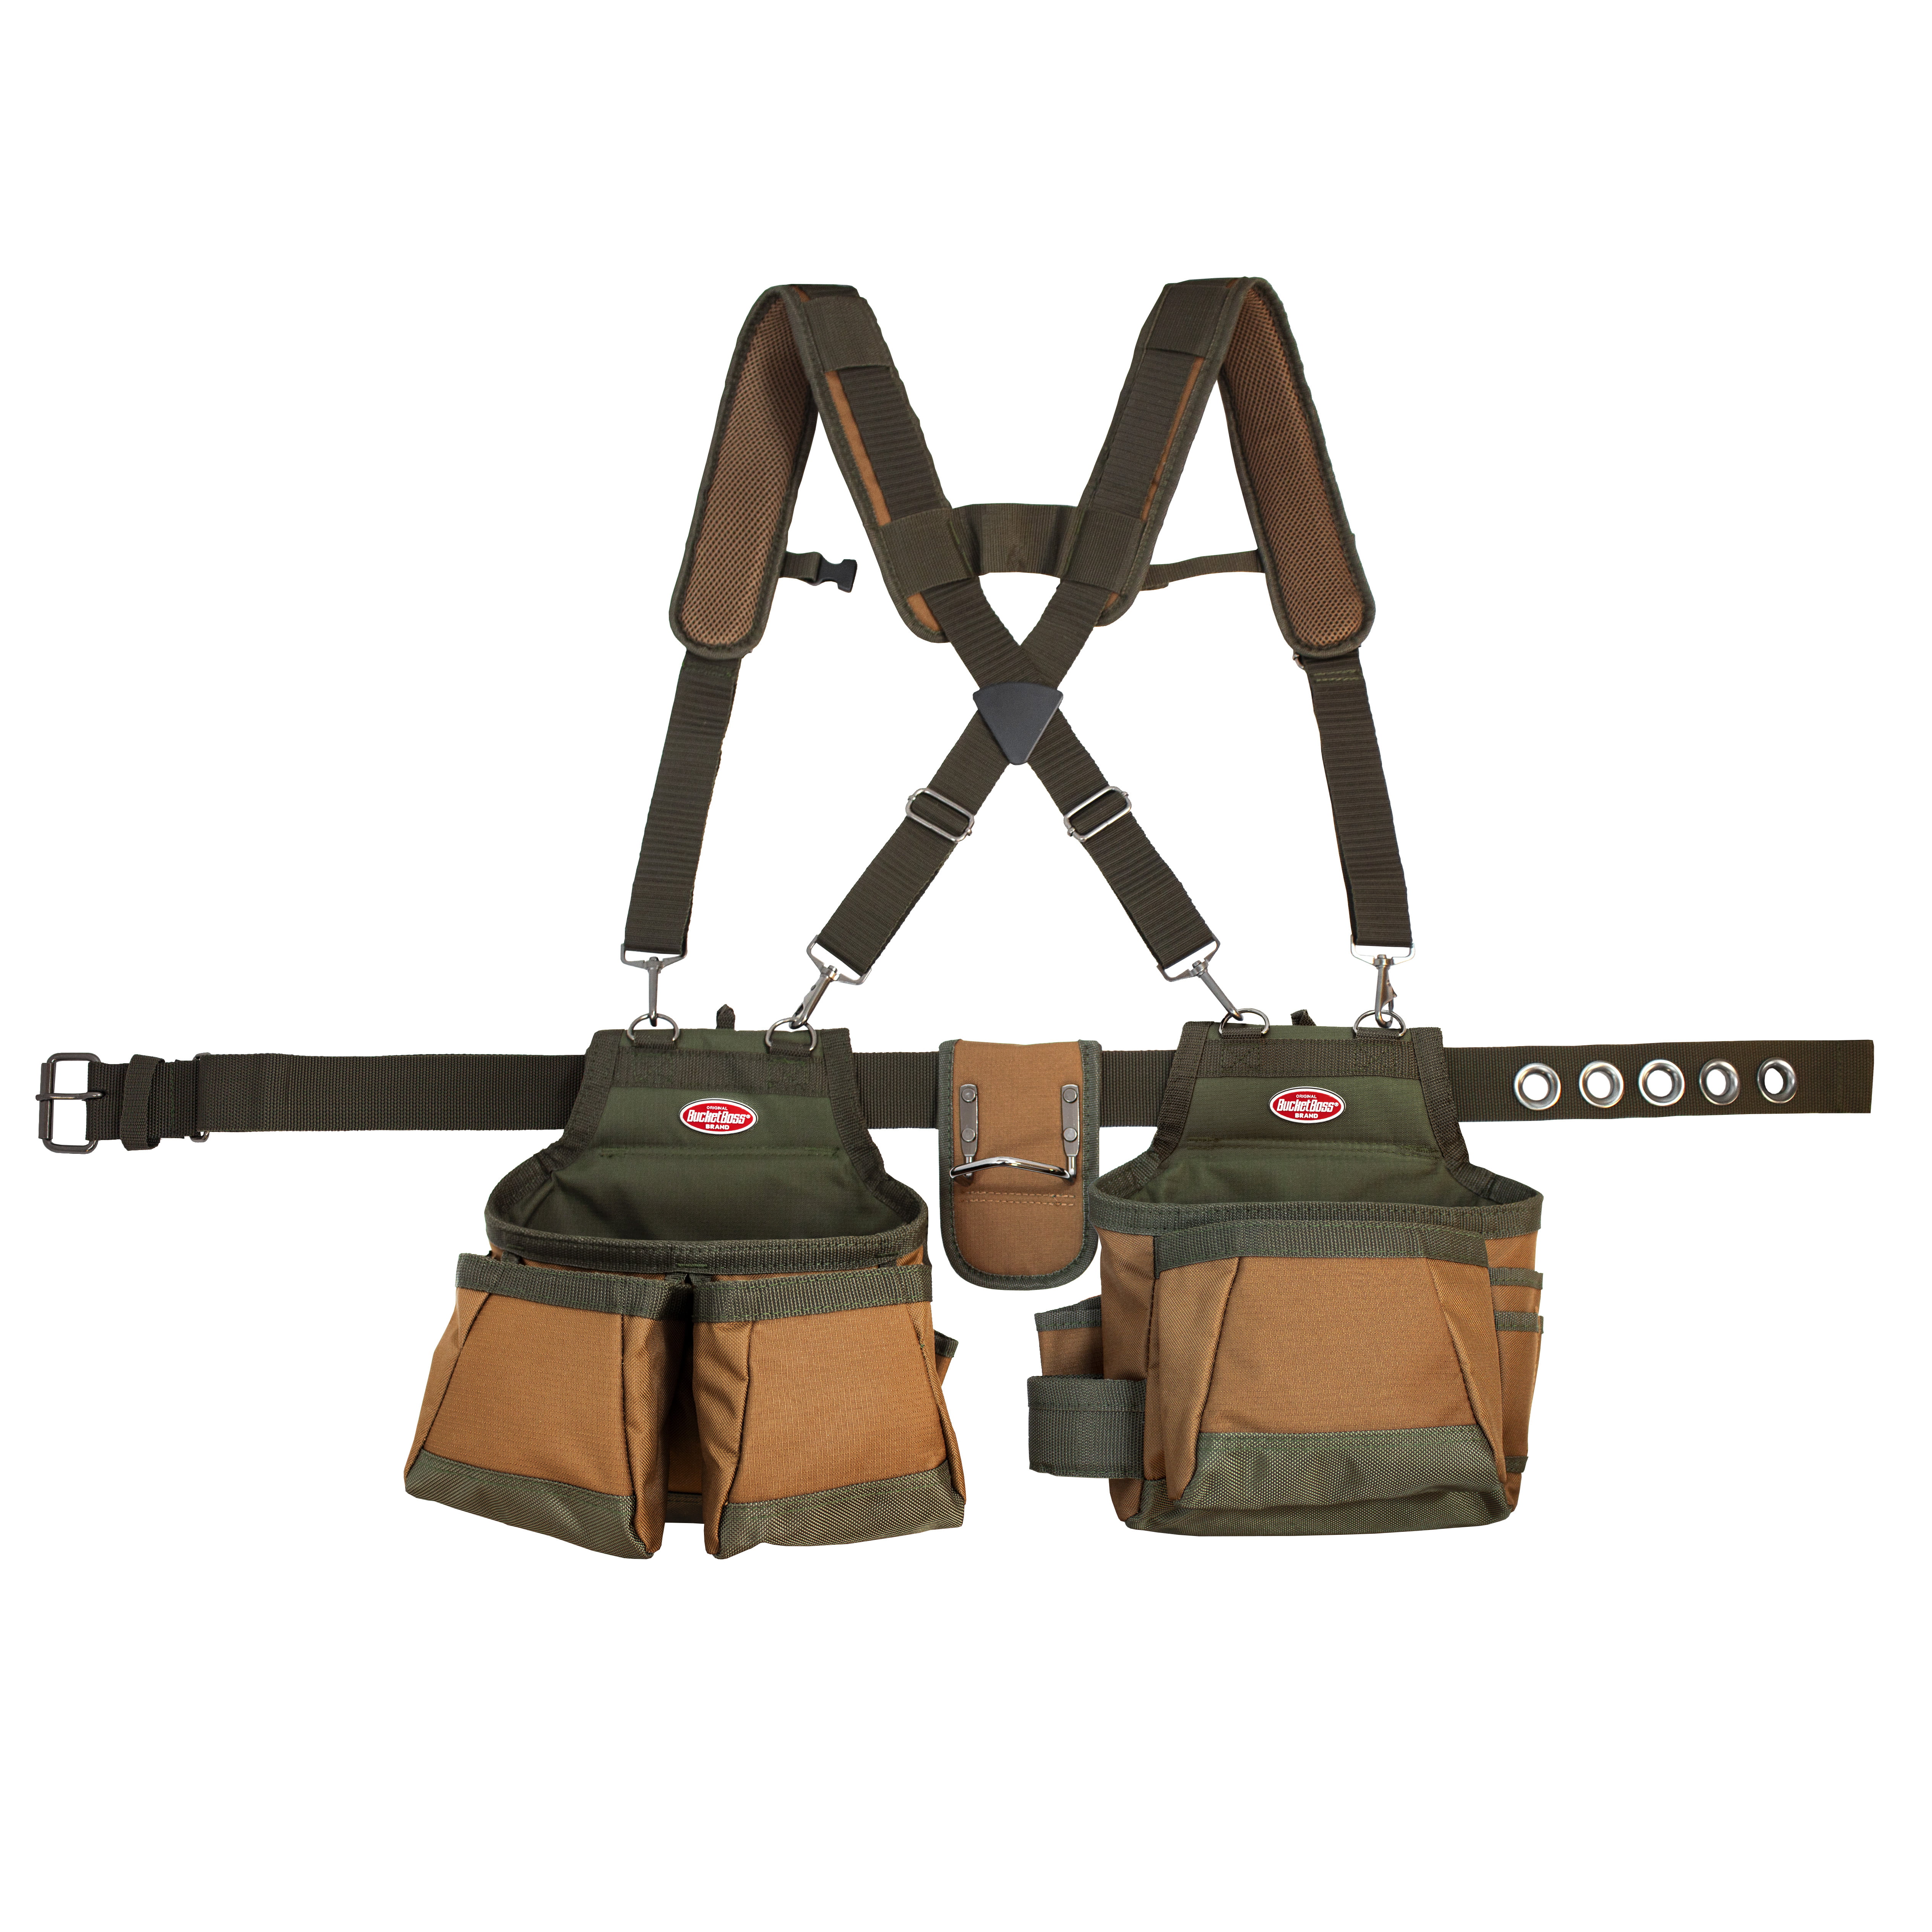 Tool Belts 50100 Pack of 2 Original Series Airlift Tool Belt with Suspenders Bucket Boss